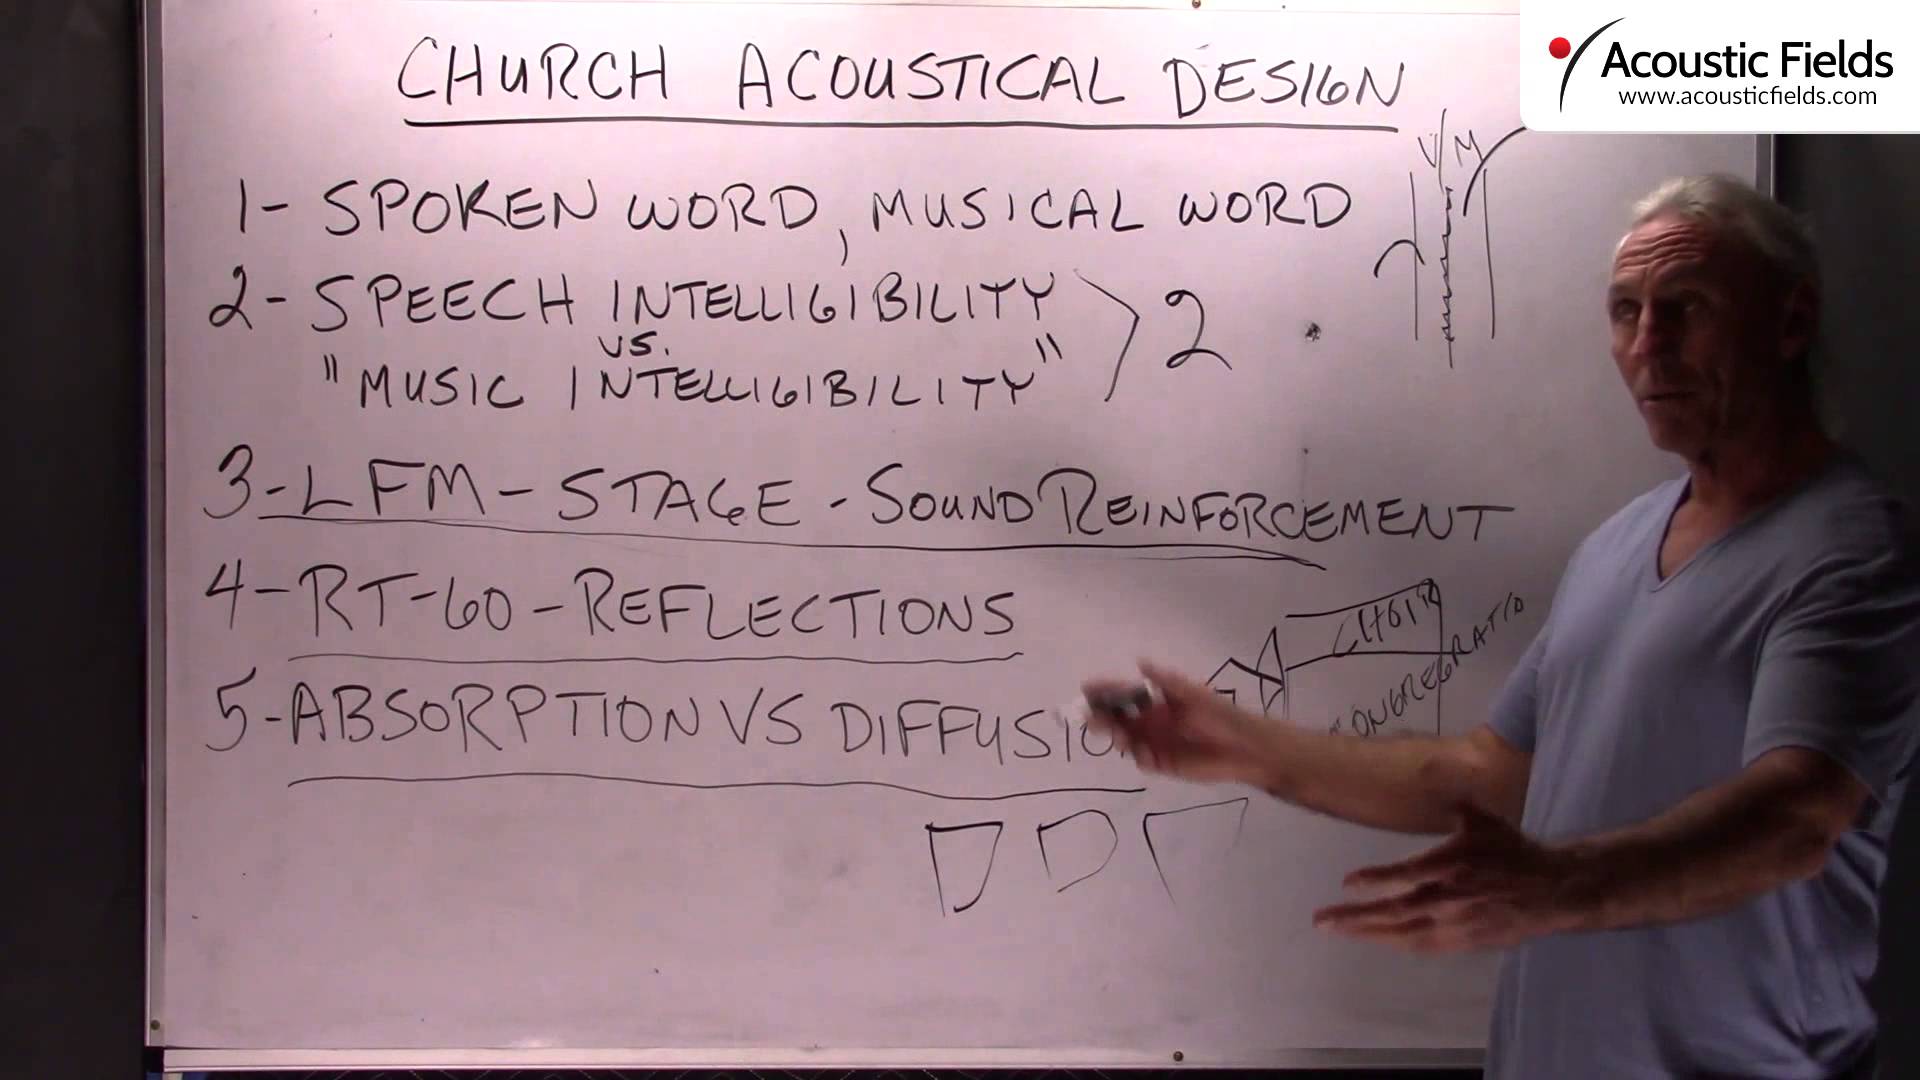 Church Acoustical Design